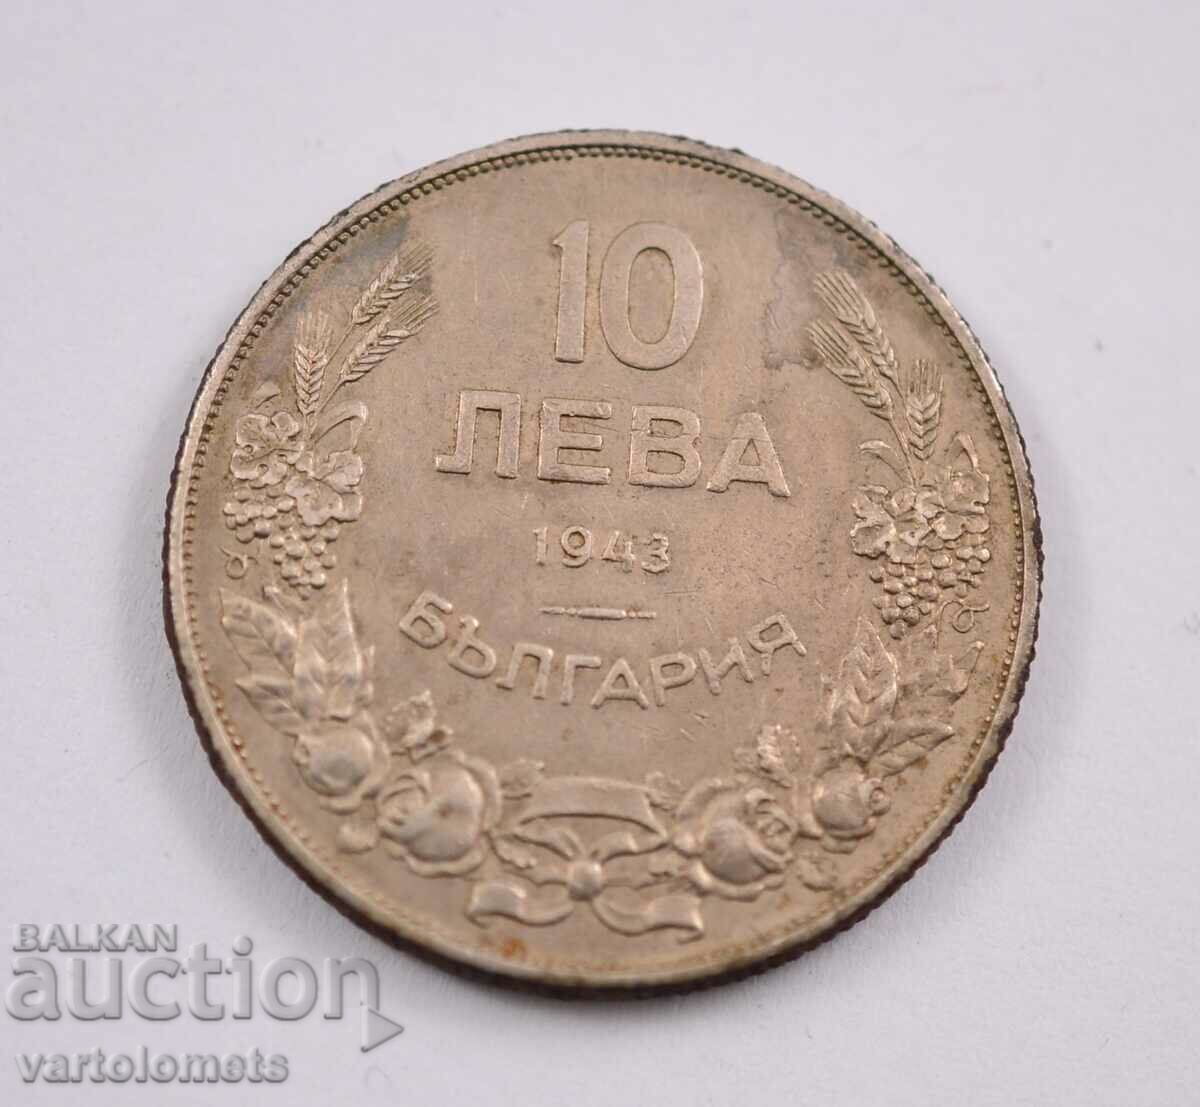 10 Leva 1943 - Bulgaria